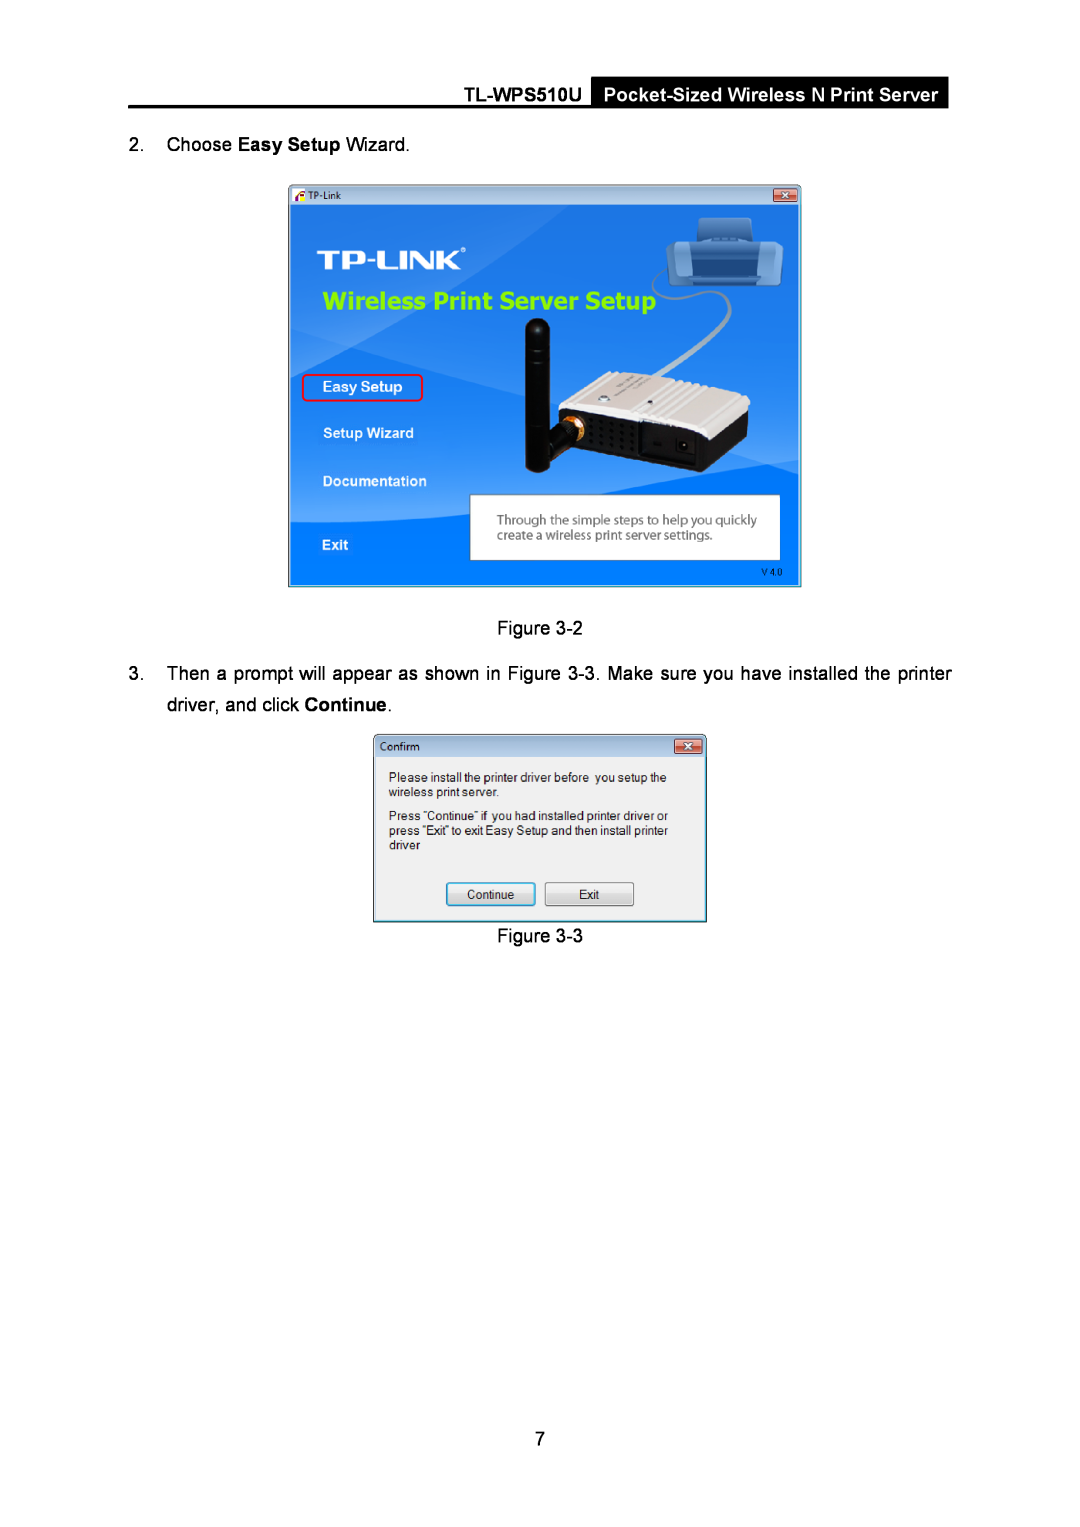 TP-Link tl-wps510u manual TL-WPS510U Pocket-Sized Wireless N Print Server, Choose Easy Setup Wizard 